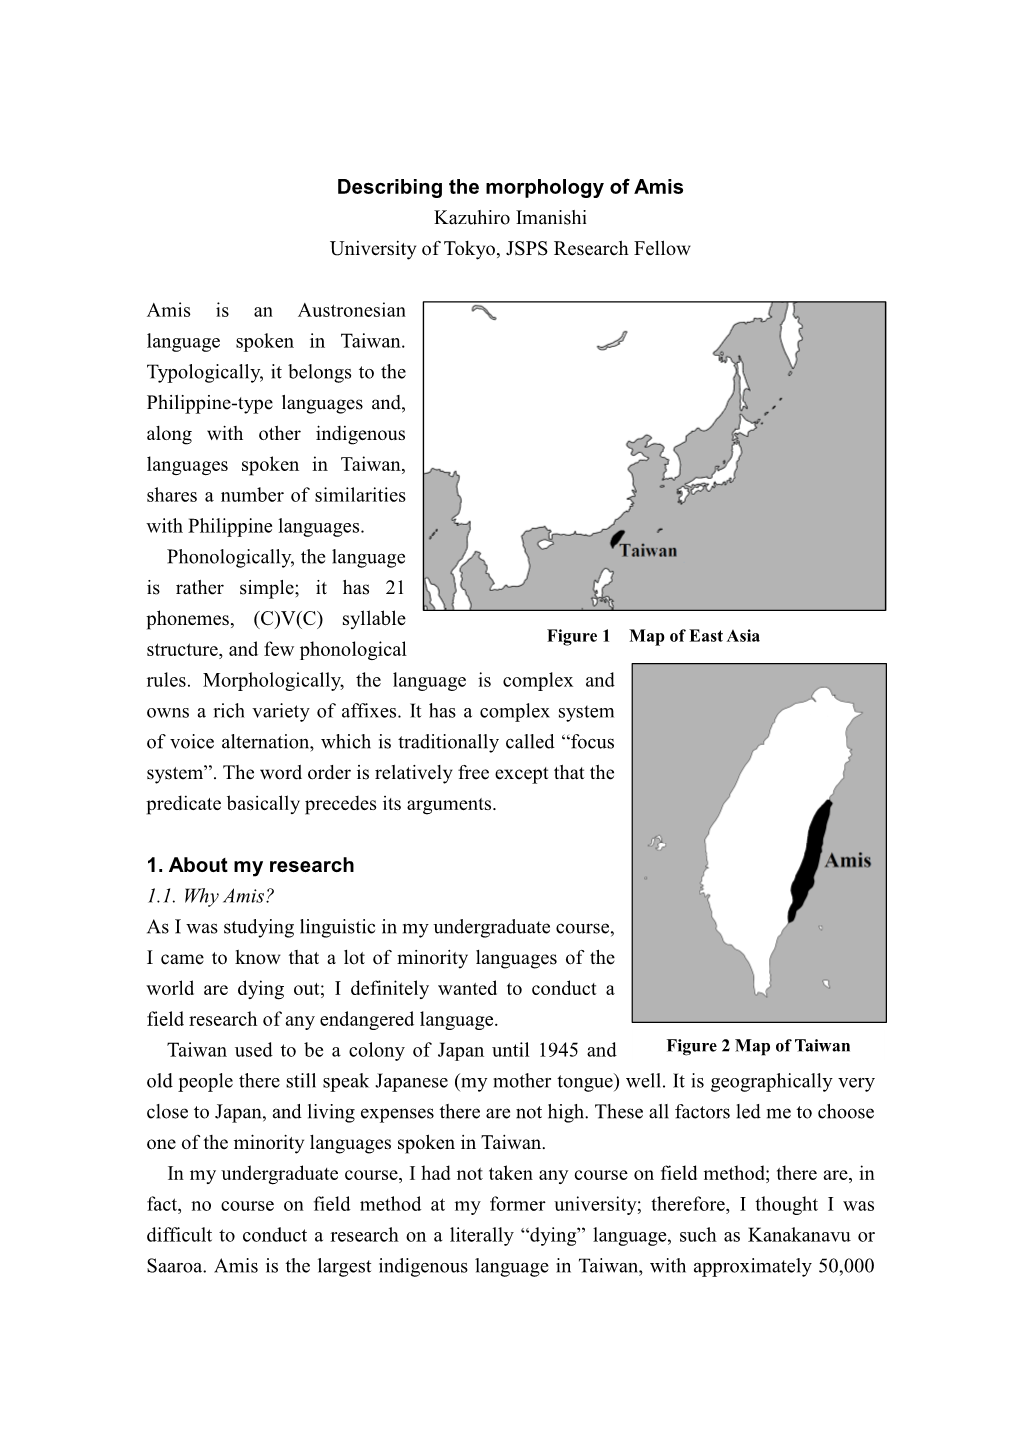 Describing the Morphology of Amis Kazuhiro Imanishi University of Tokyo, JSPS Research Fellow